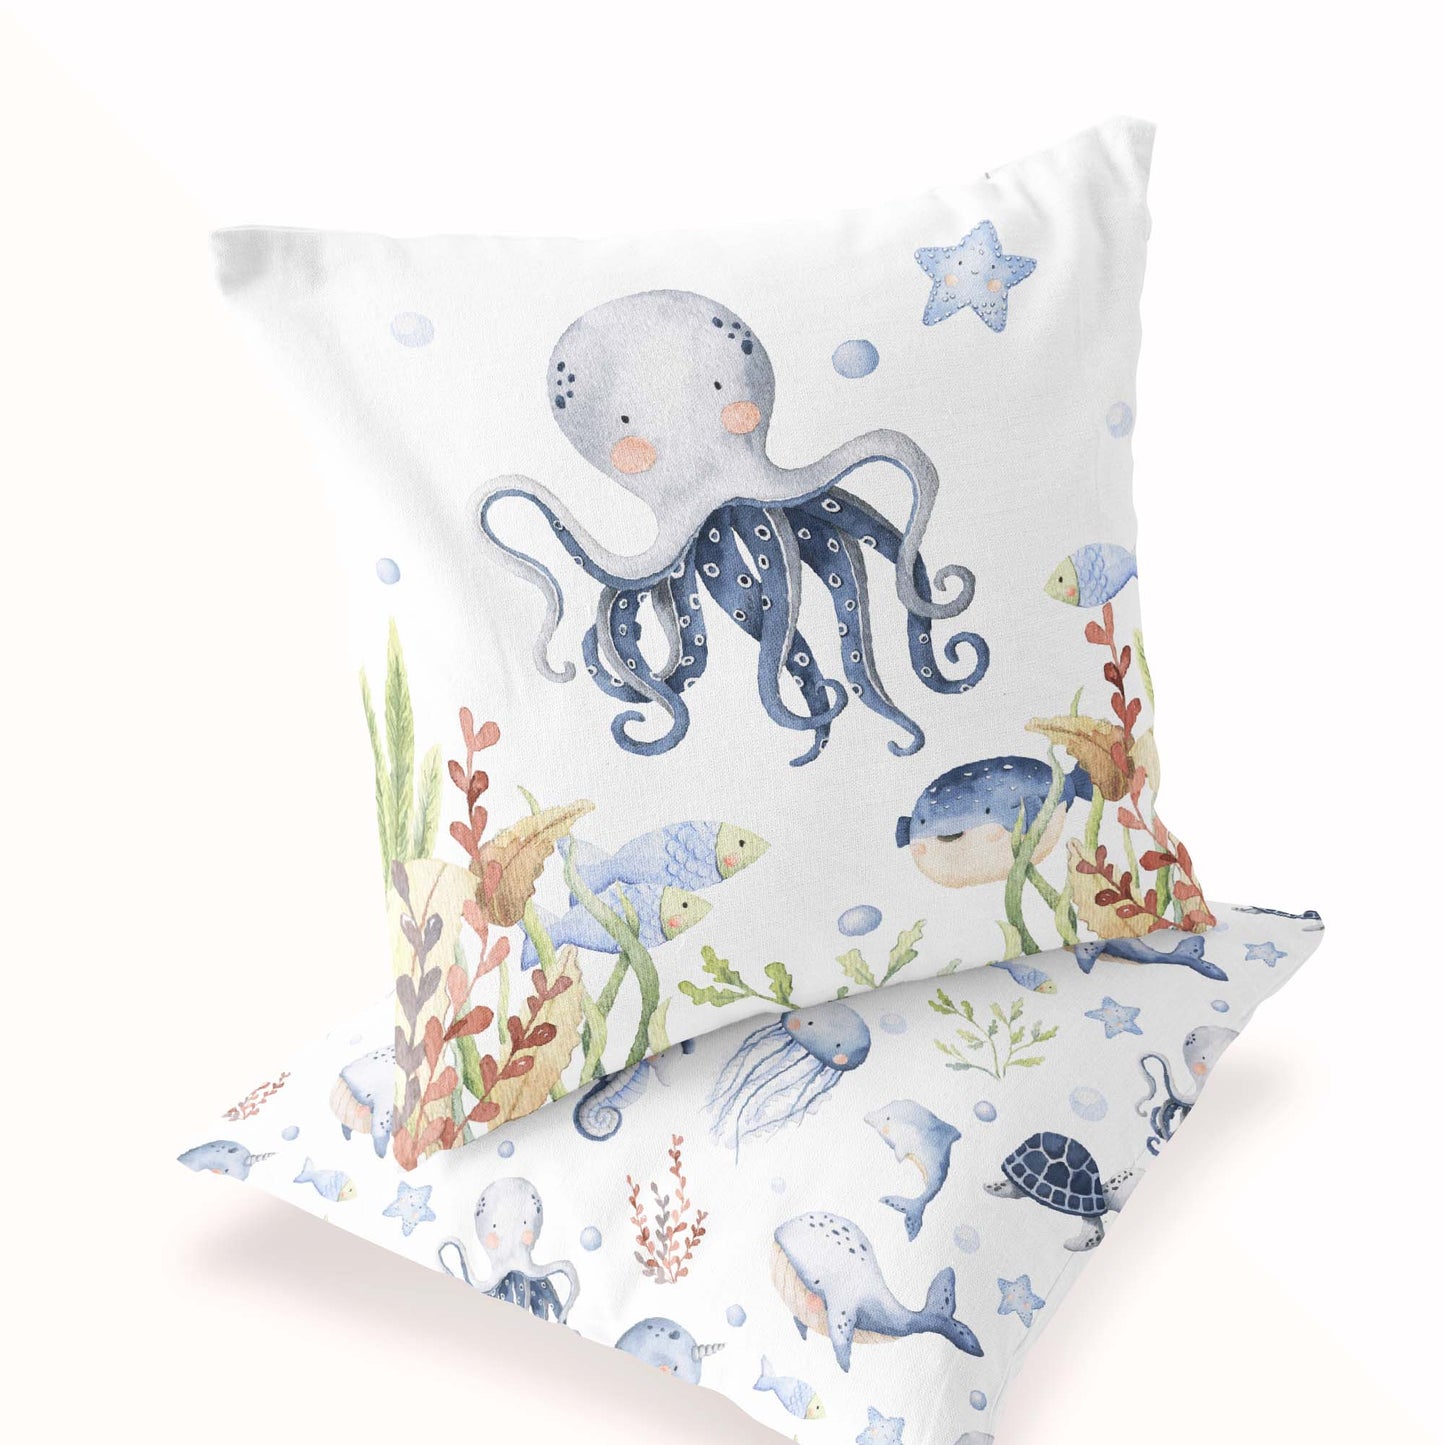 Octopus Pillow COVER, Under the sea nursery bedding - Little Ocean